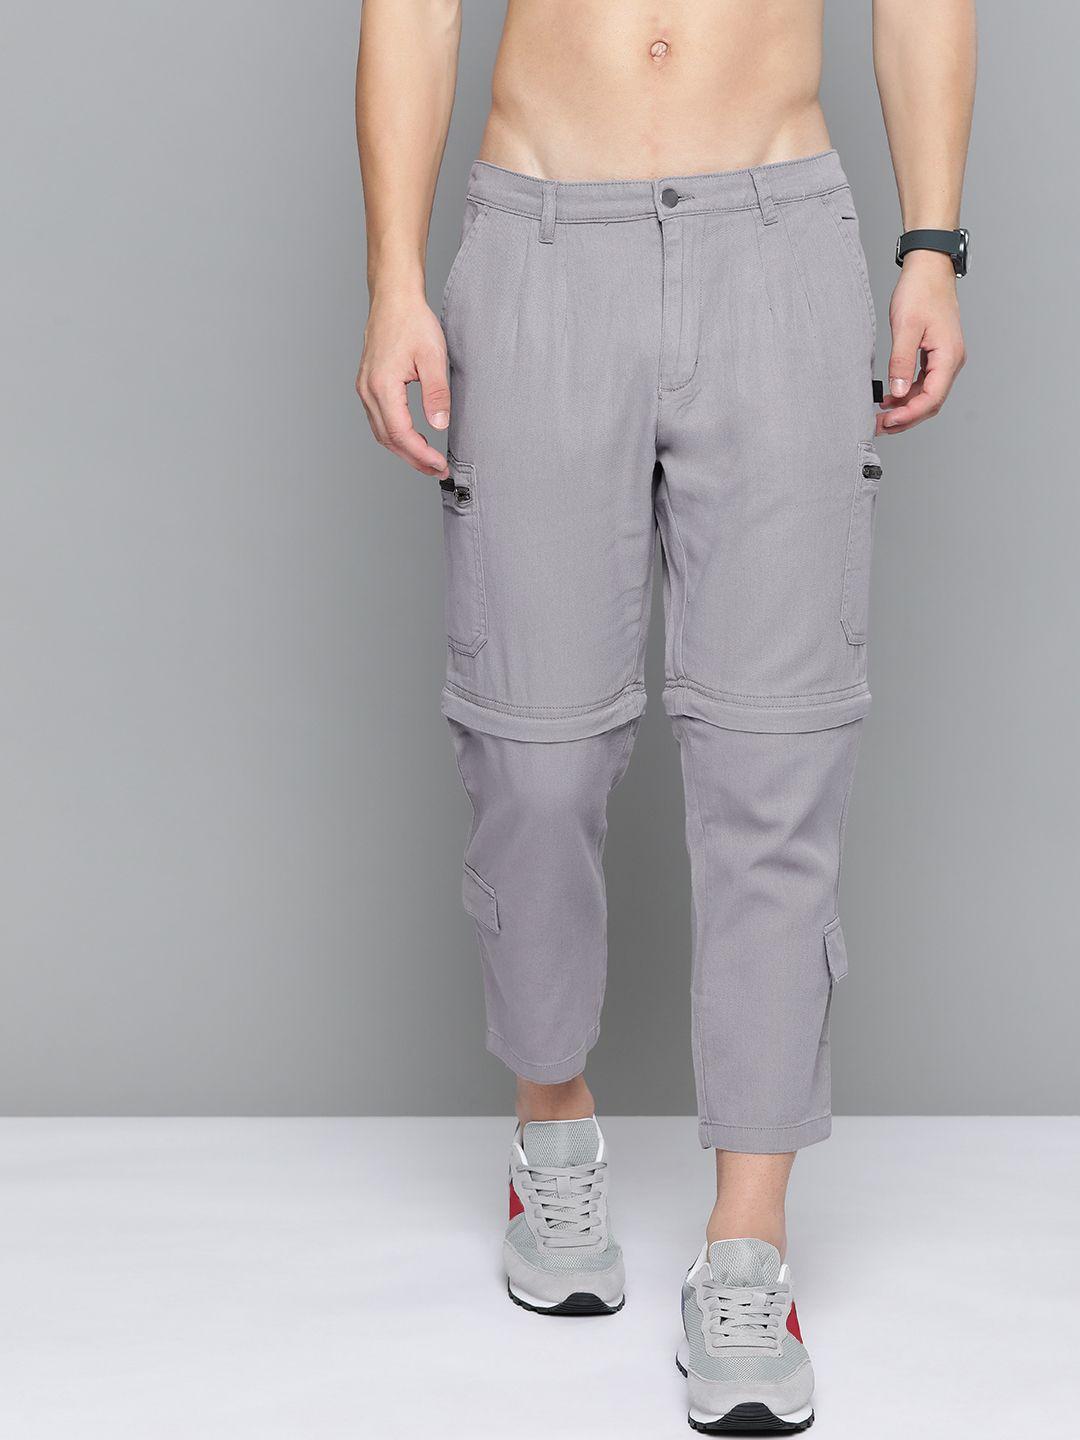 kook n keech men grey solid pure cotton convertible cargos trousers